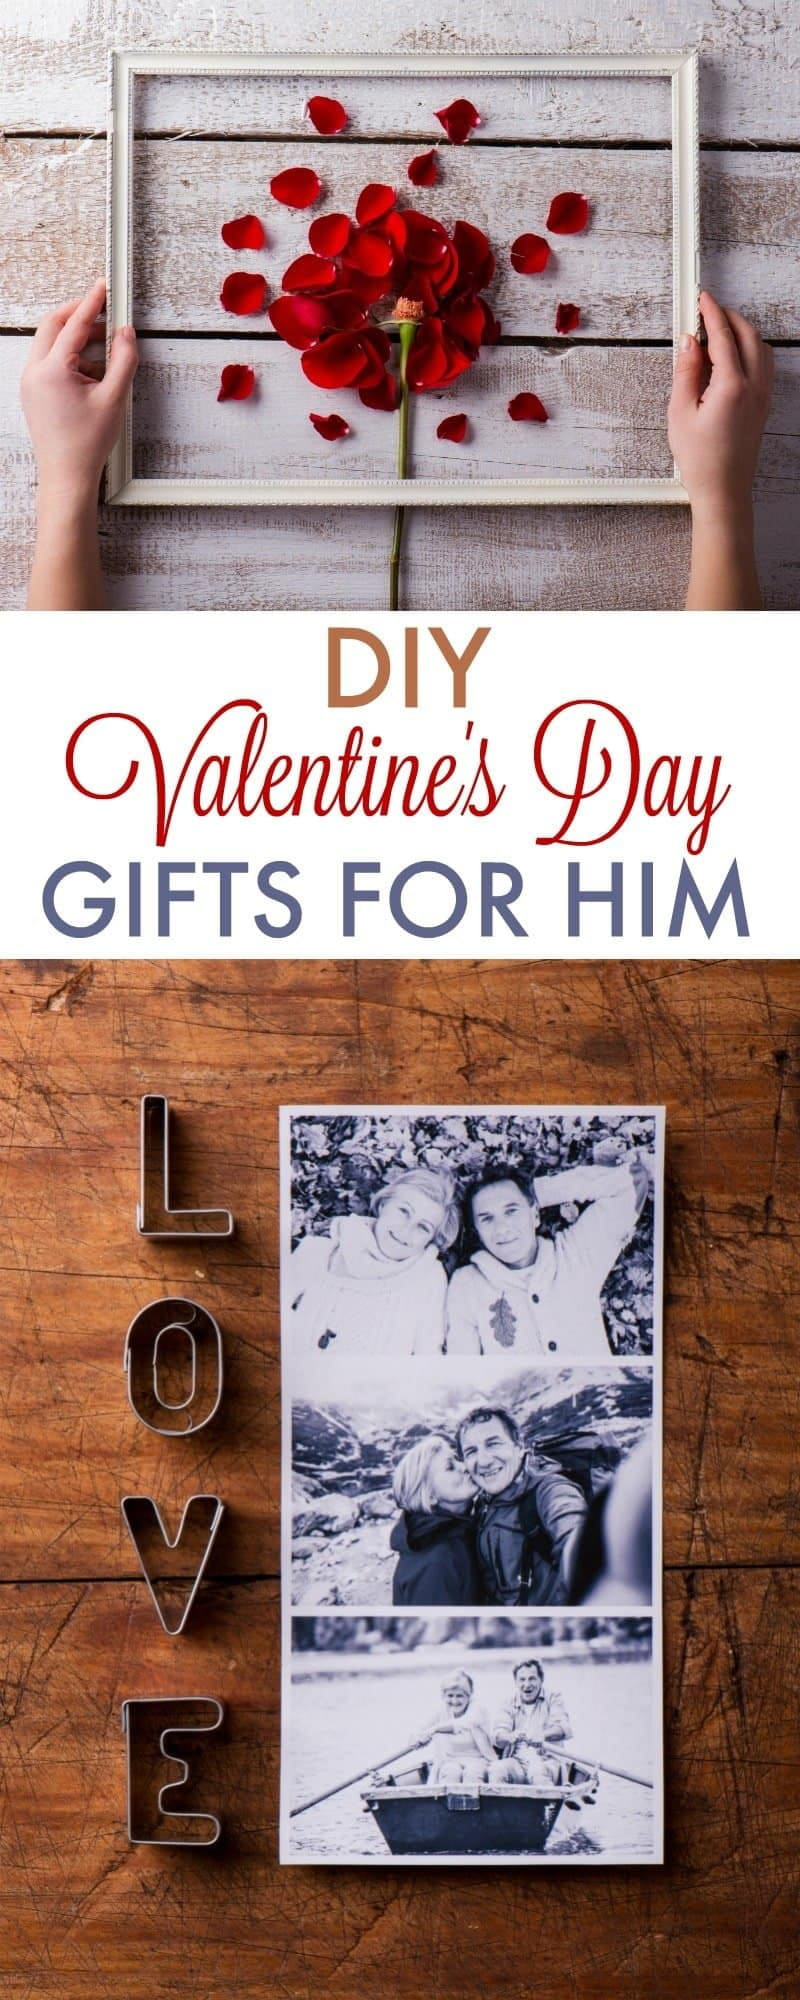 DIY Gifts For Husbands
 DIY Valentine s Day Gifts for Boyfriend 730 Sage Street